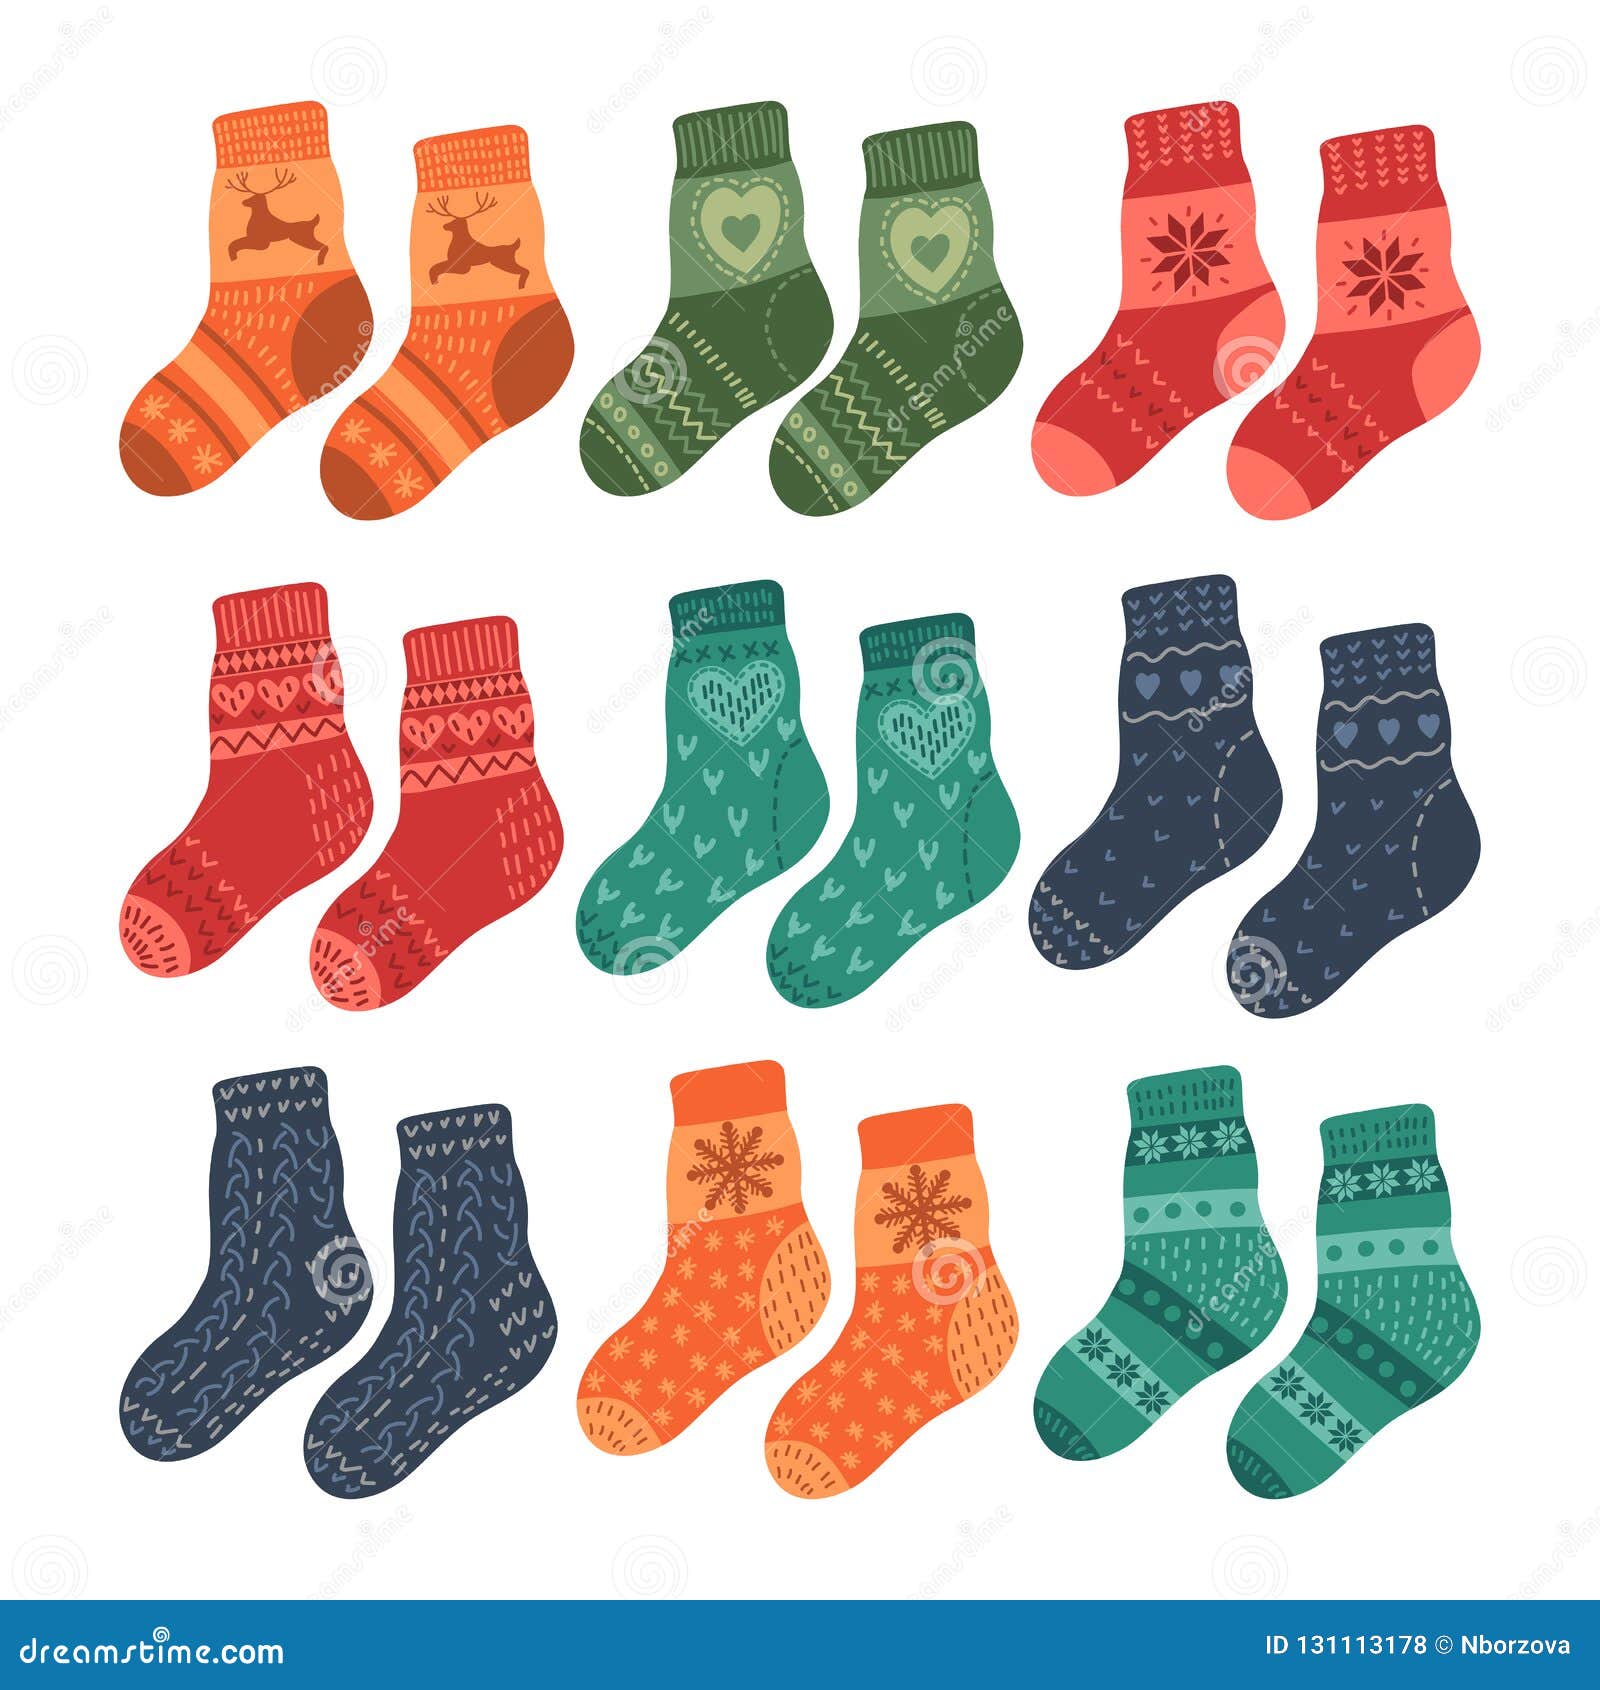 Pairs of warm socks stock vector. Illustration of footwear - 131113178